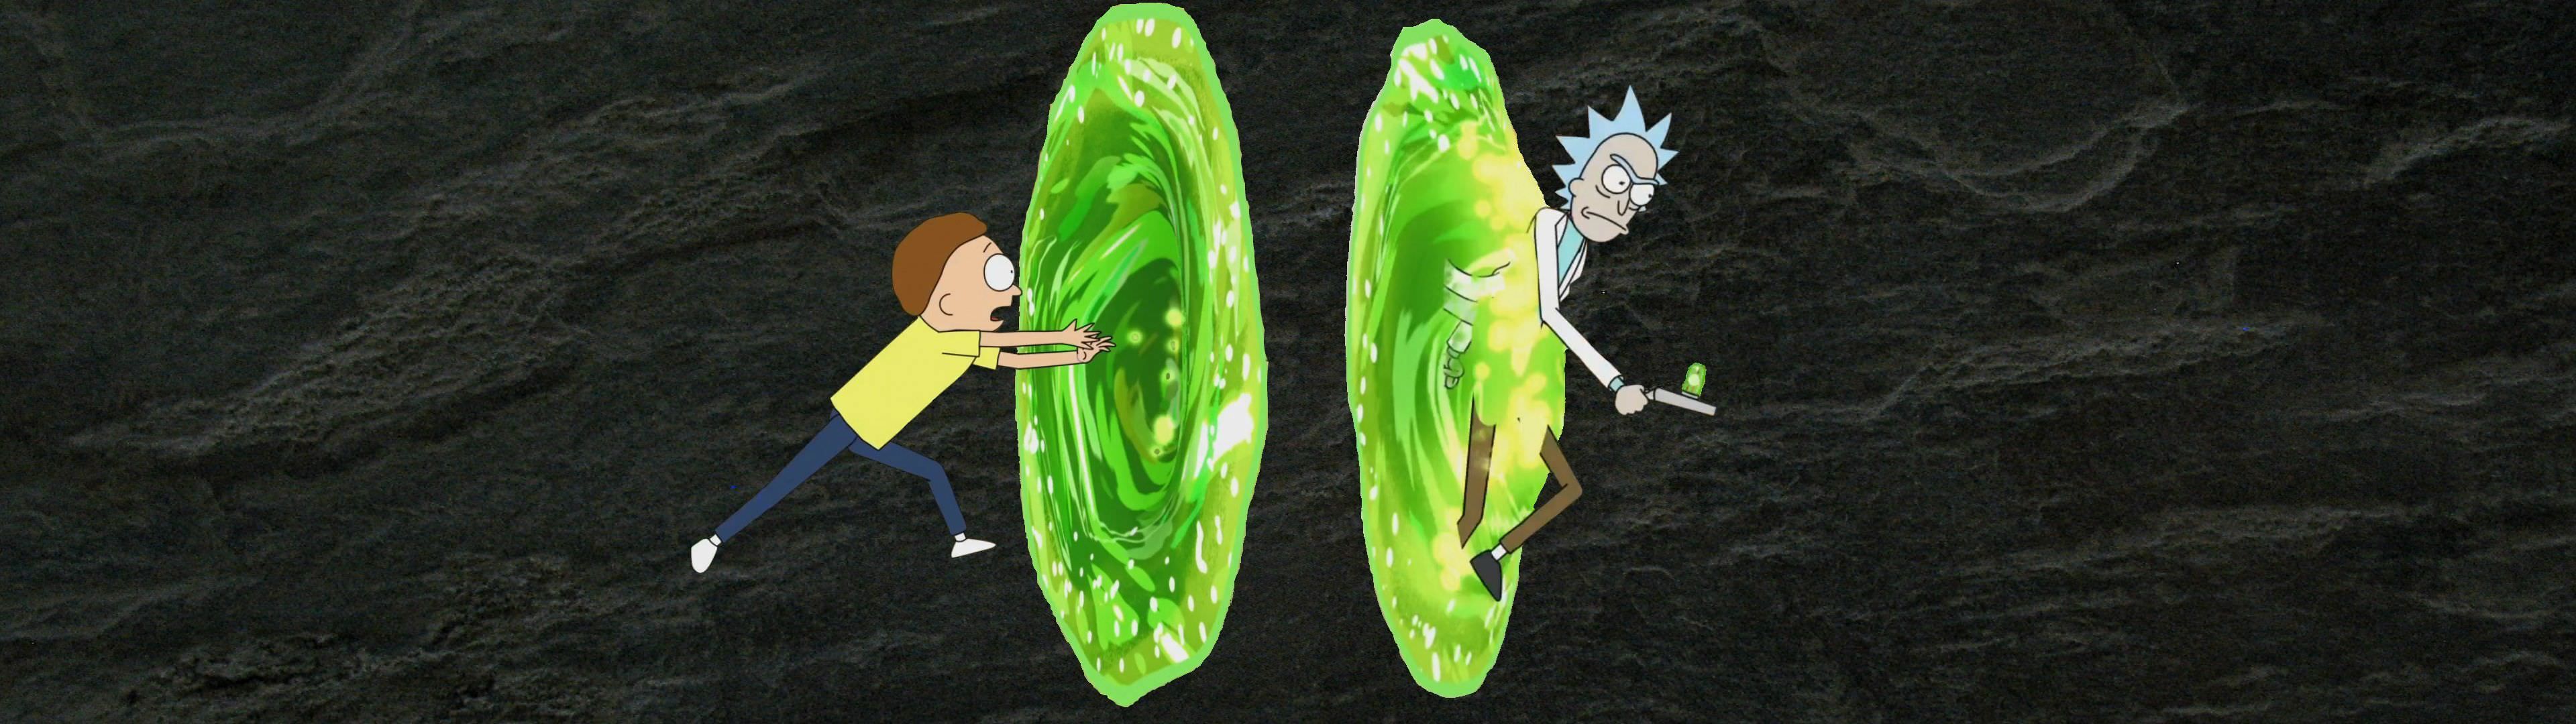 Rick and Morty Portal Wallpaper.